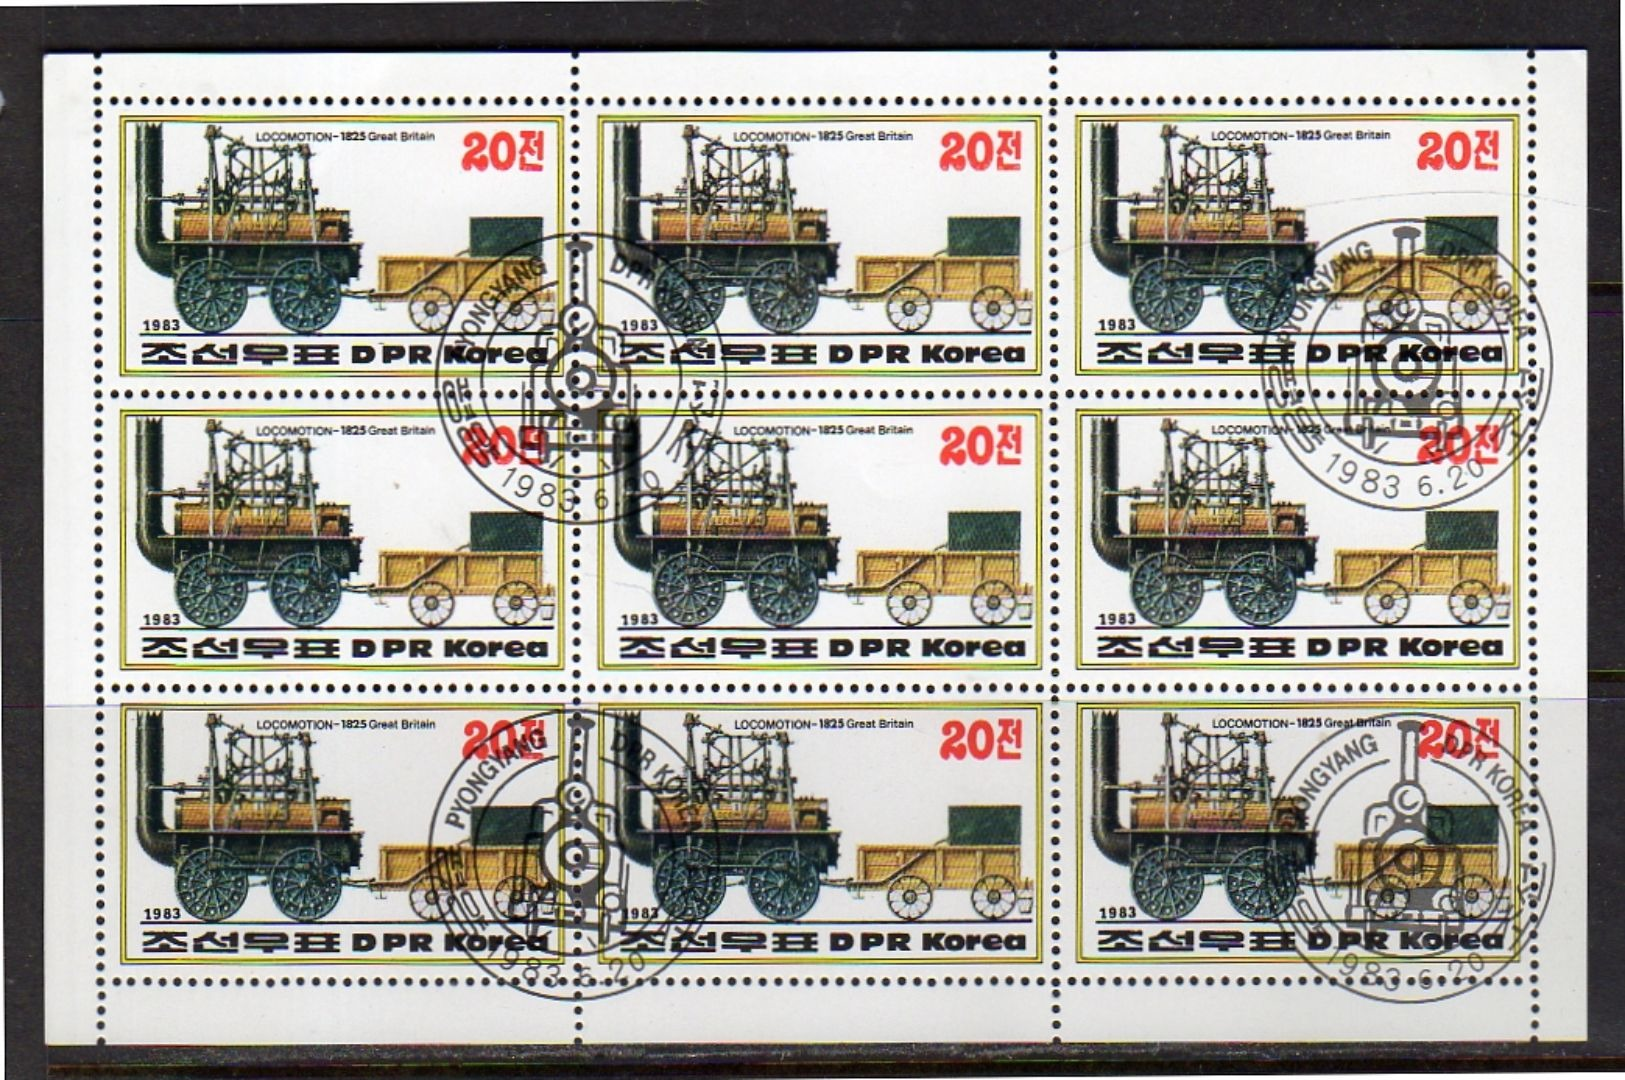 1983 Train Miniature Sheet V Used (k220) - Korea, North